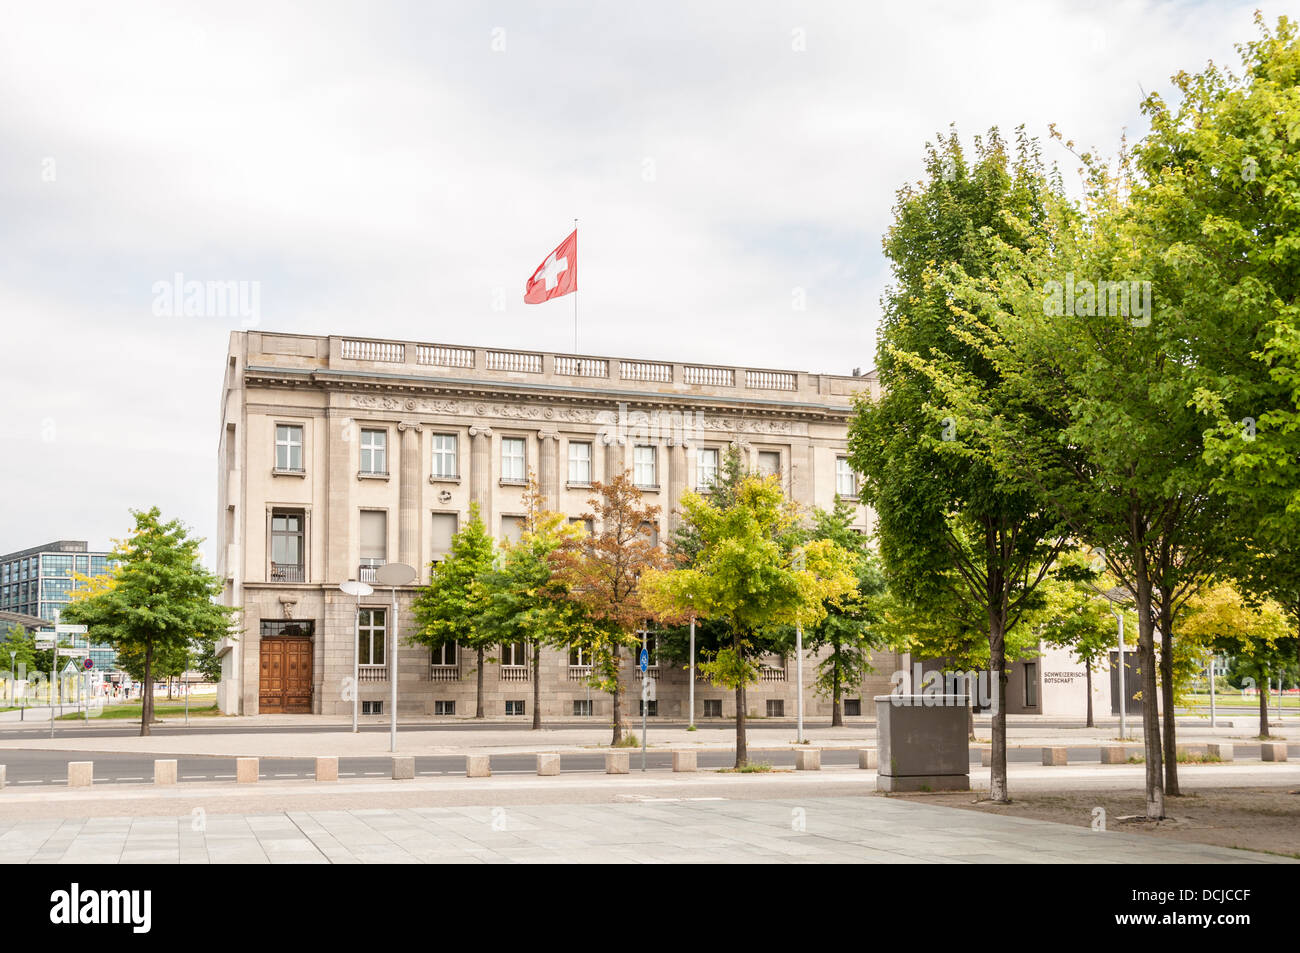 Swiss Embassy - Scweizerische Botschaft - Berlin Germany Stock Photo